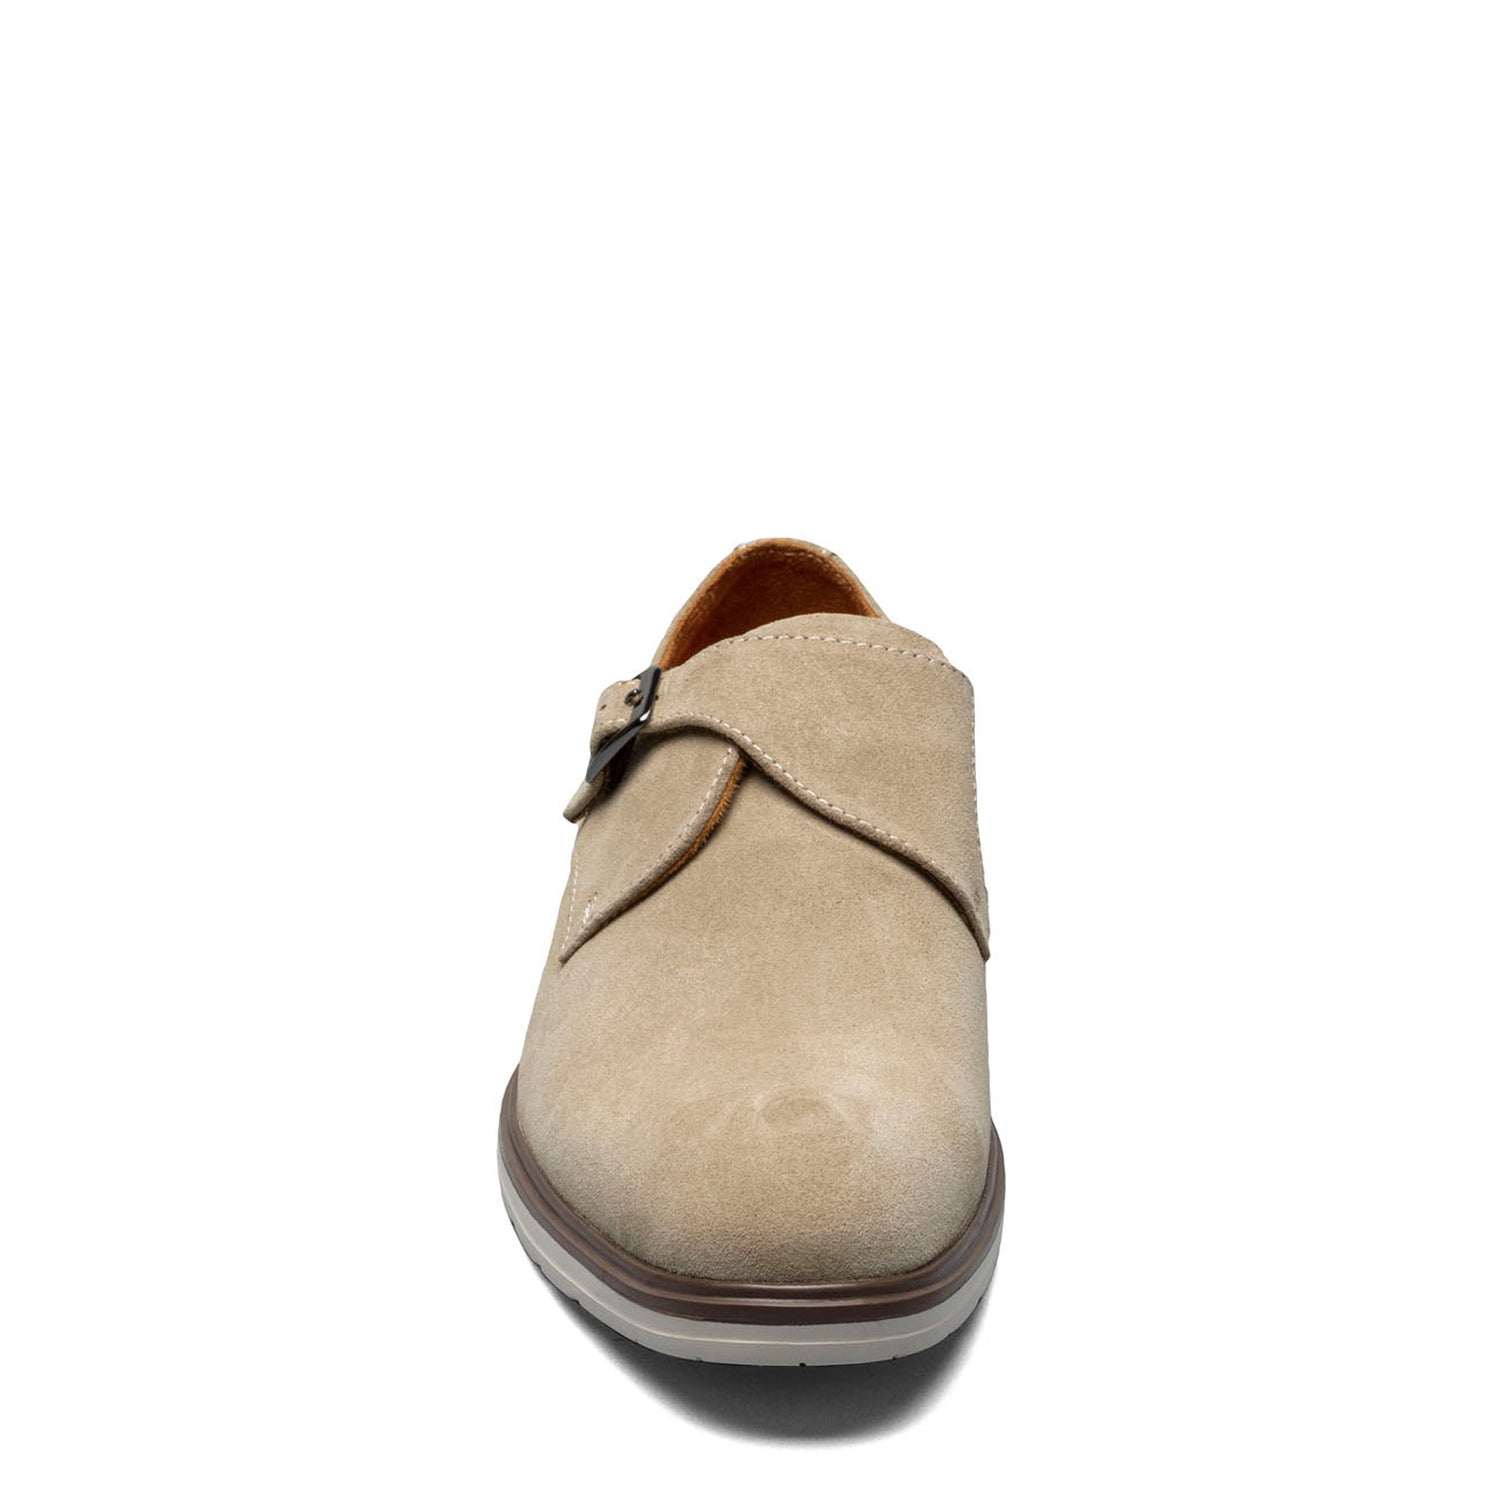 Peltz Shoes  Men's Stacy Adams Taylen Monk Strap SANDSTONE 25589-283